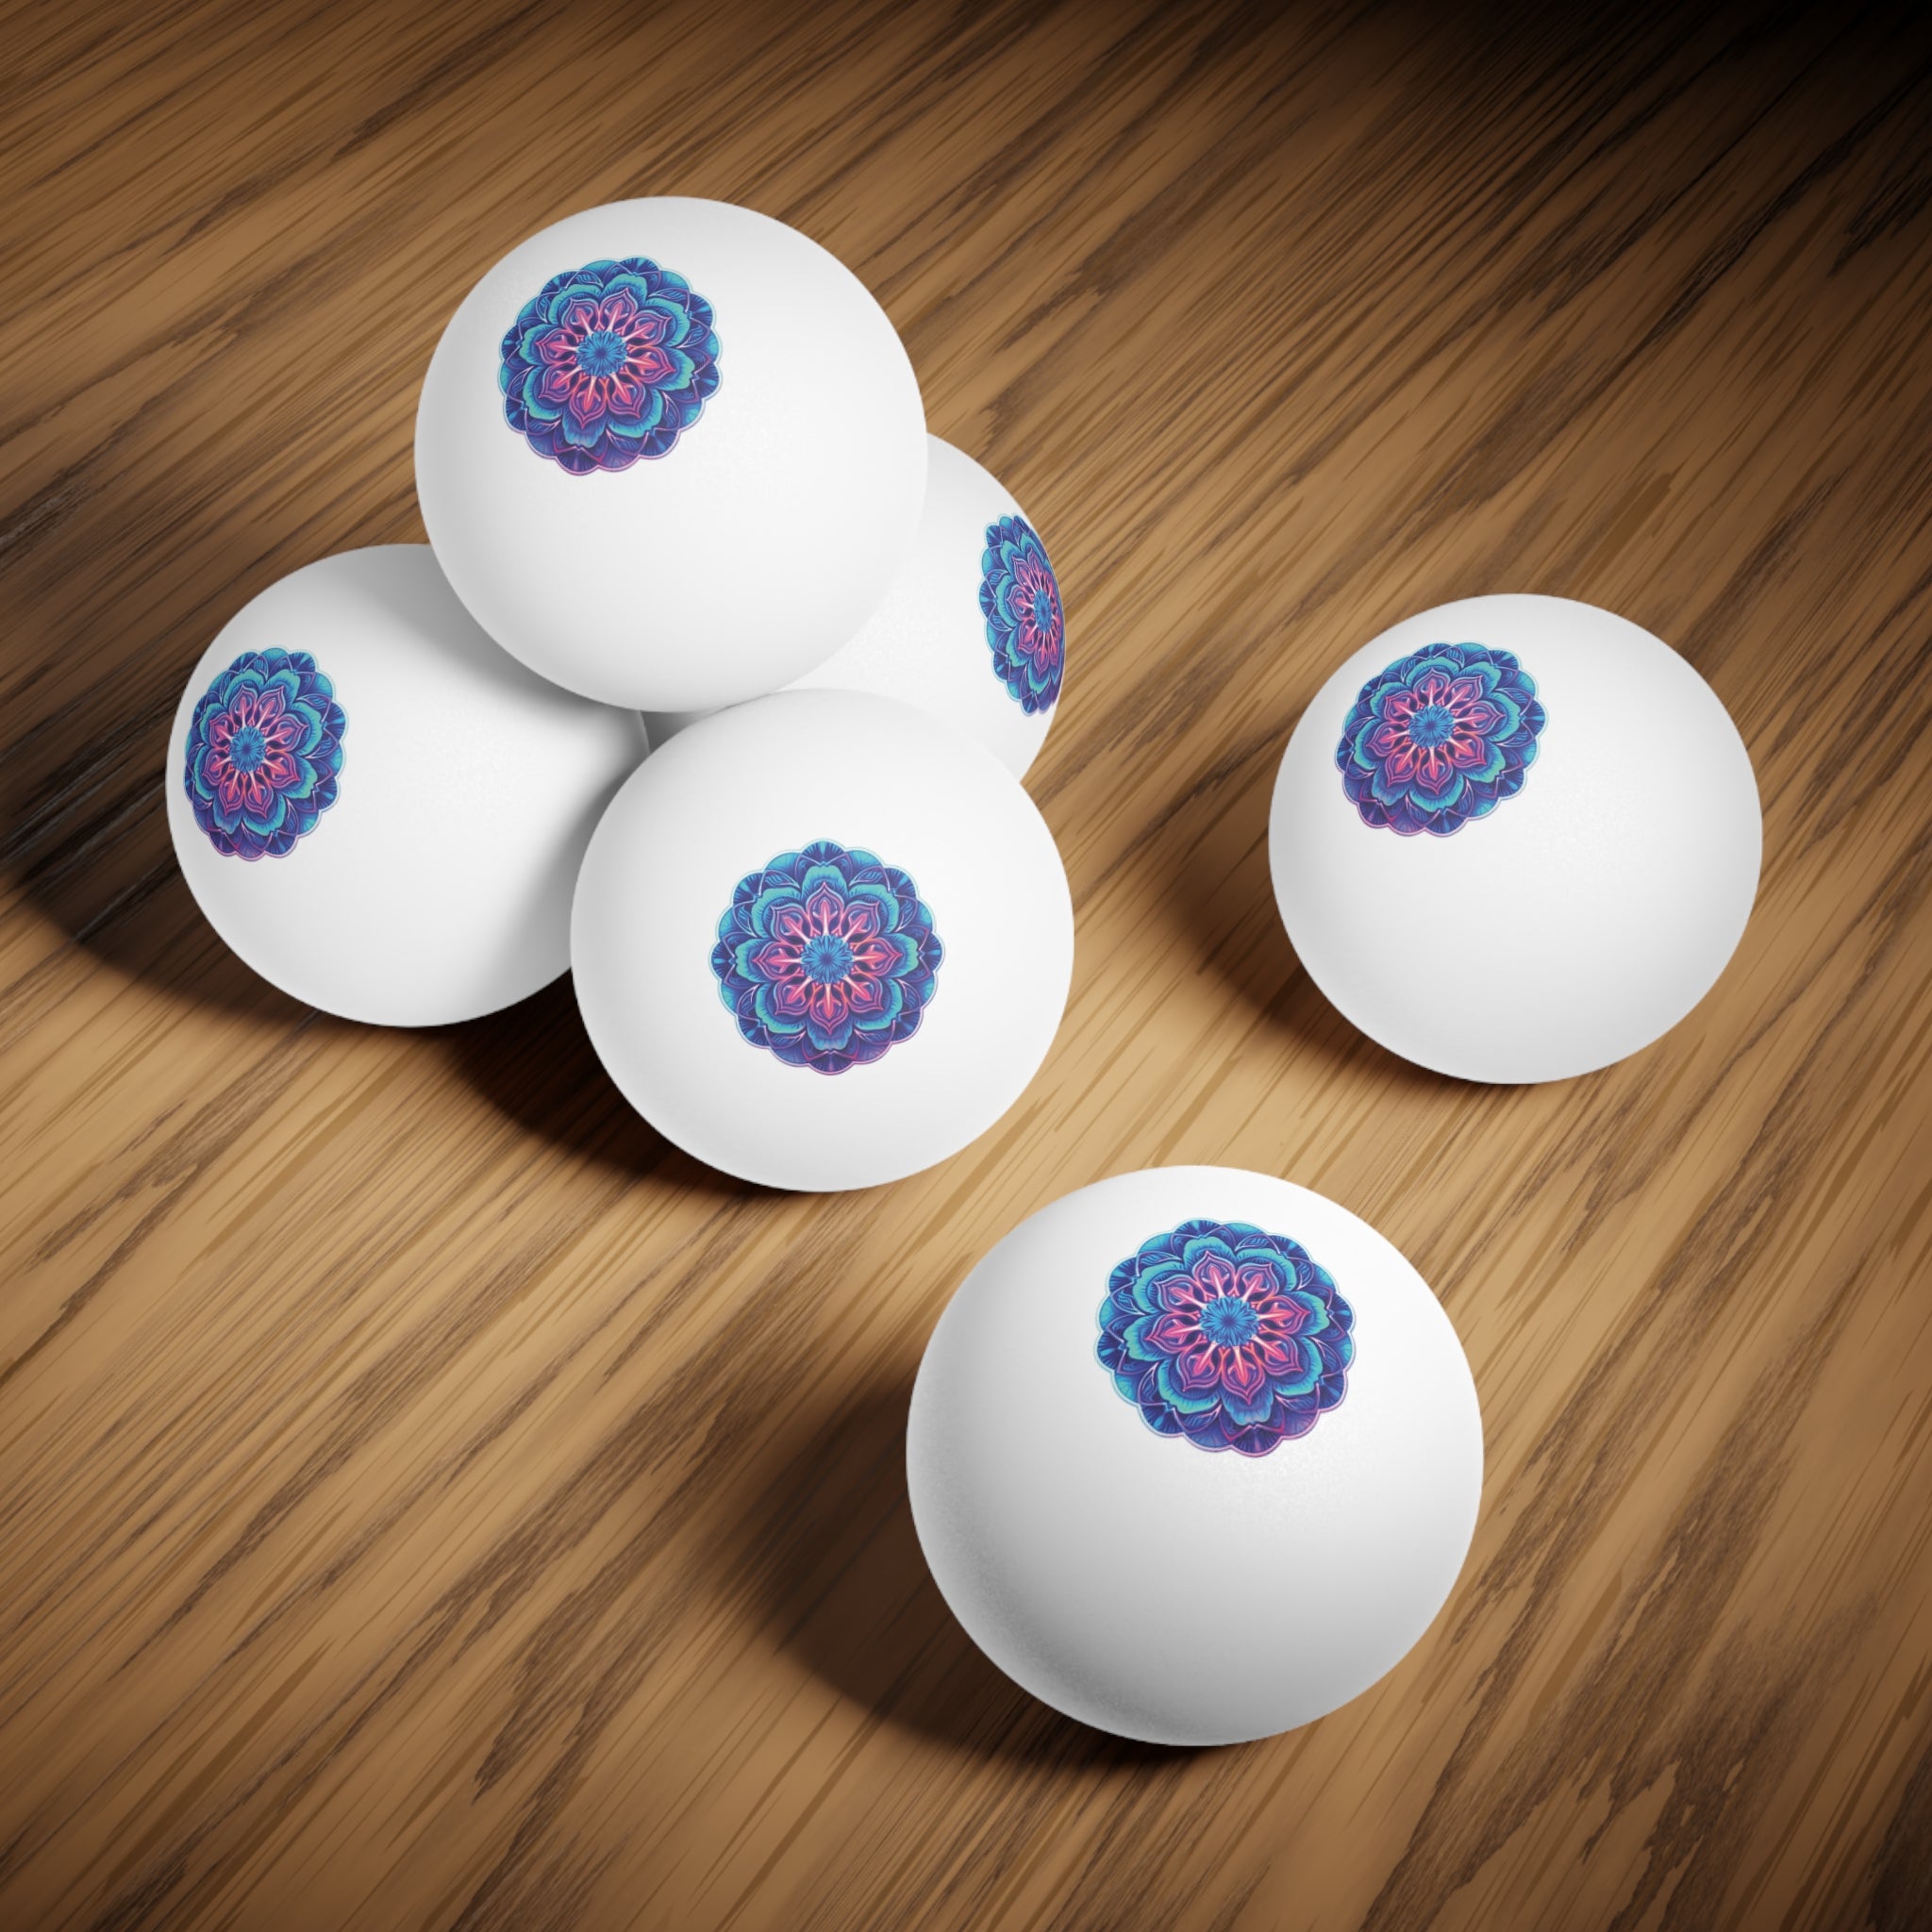 Ping Pong Balls, 6 pcs - Pop Art - Mandalas 03